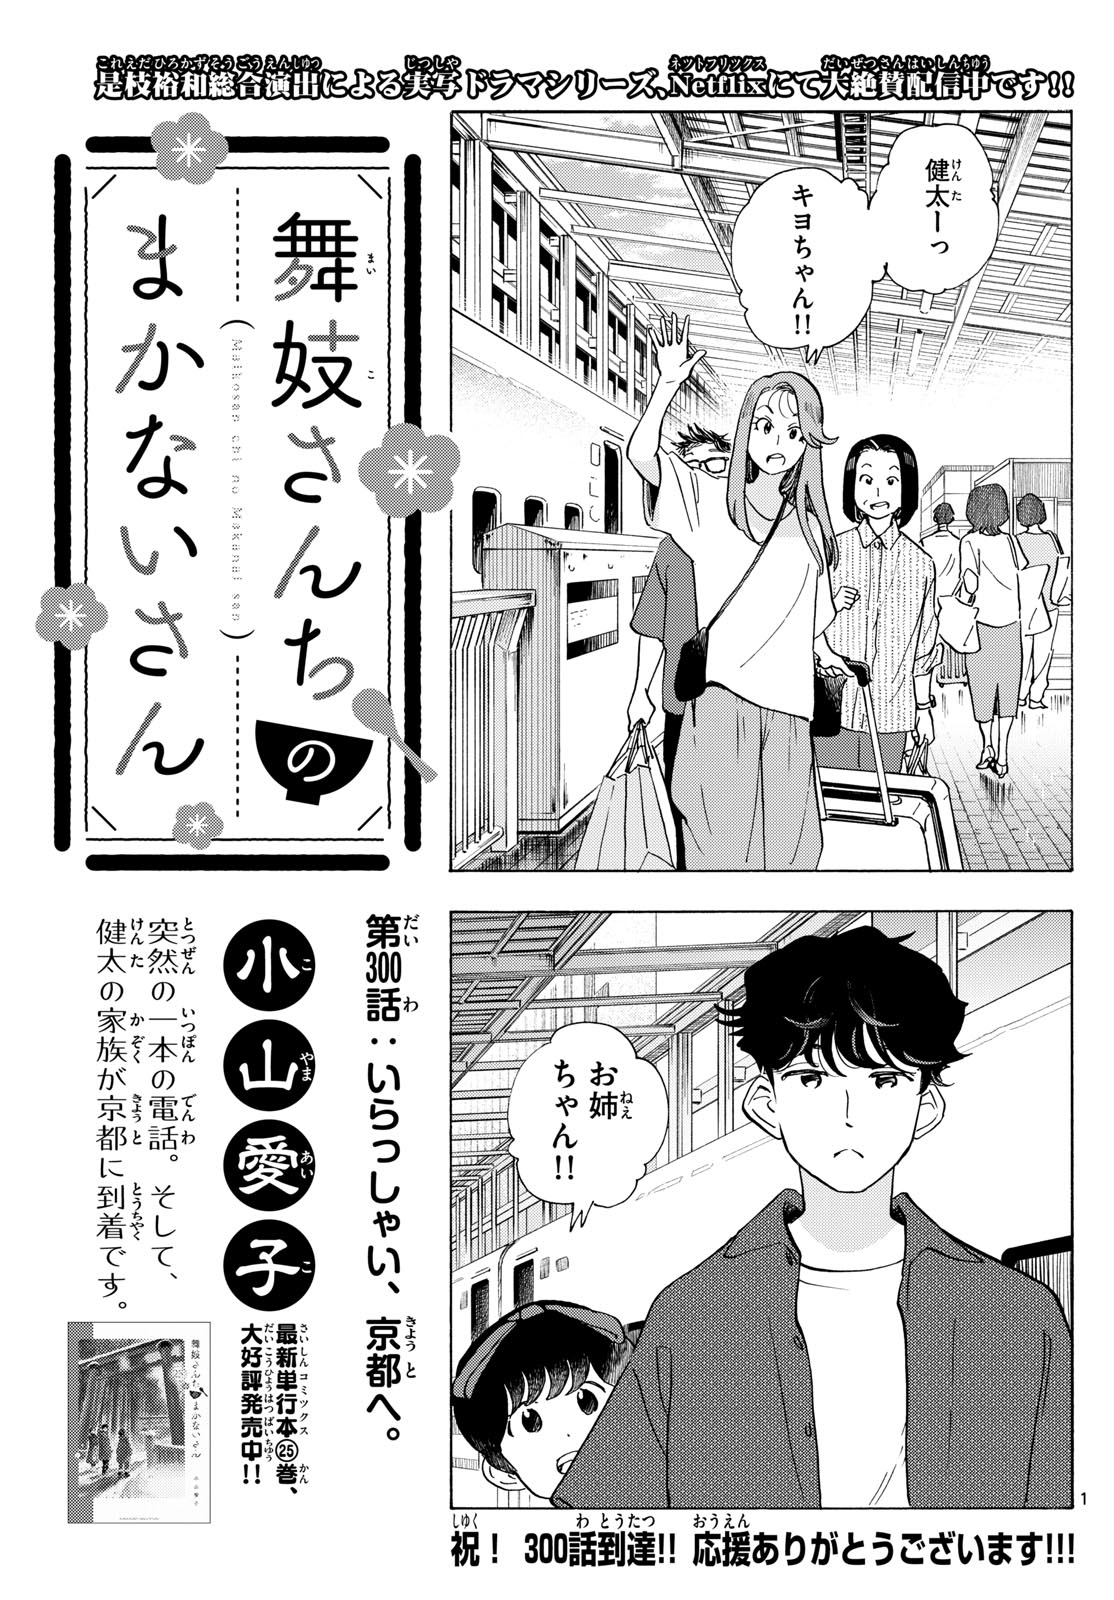 Maiko-san Chi no Makanai-san - Chapter 300 - Page 1